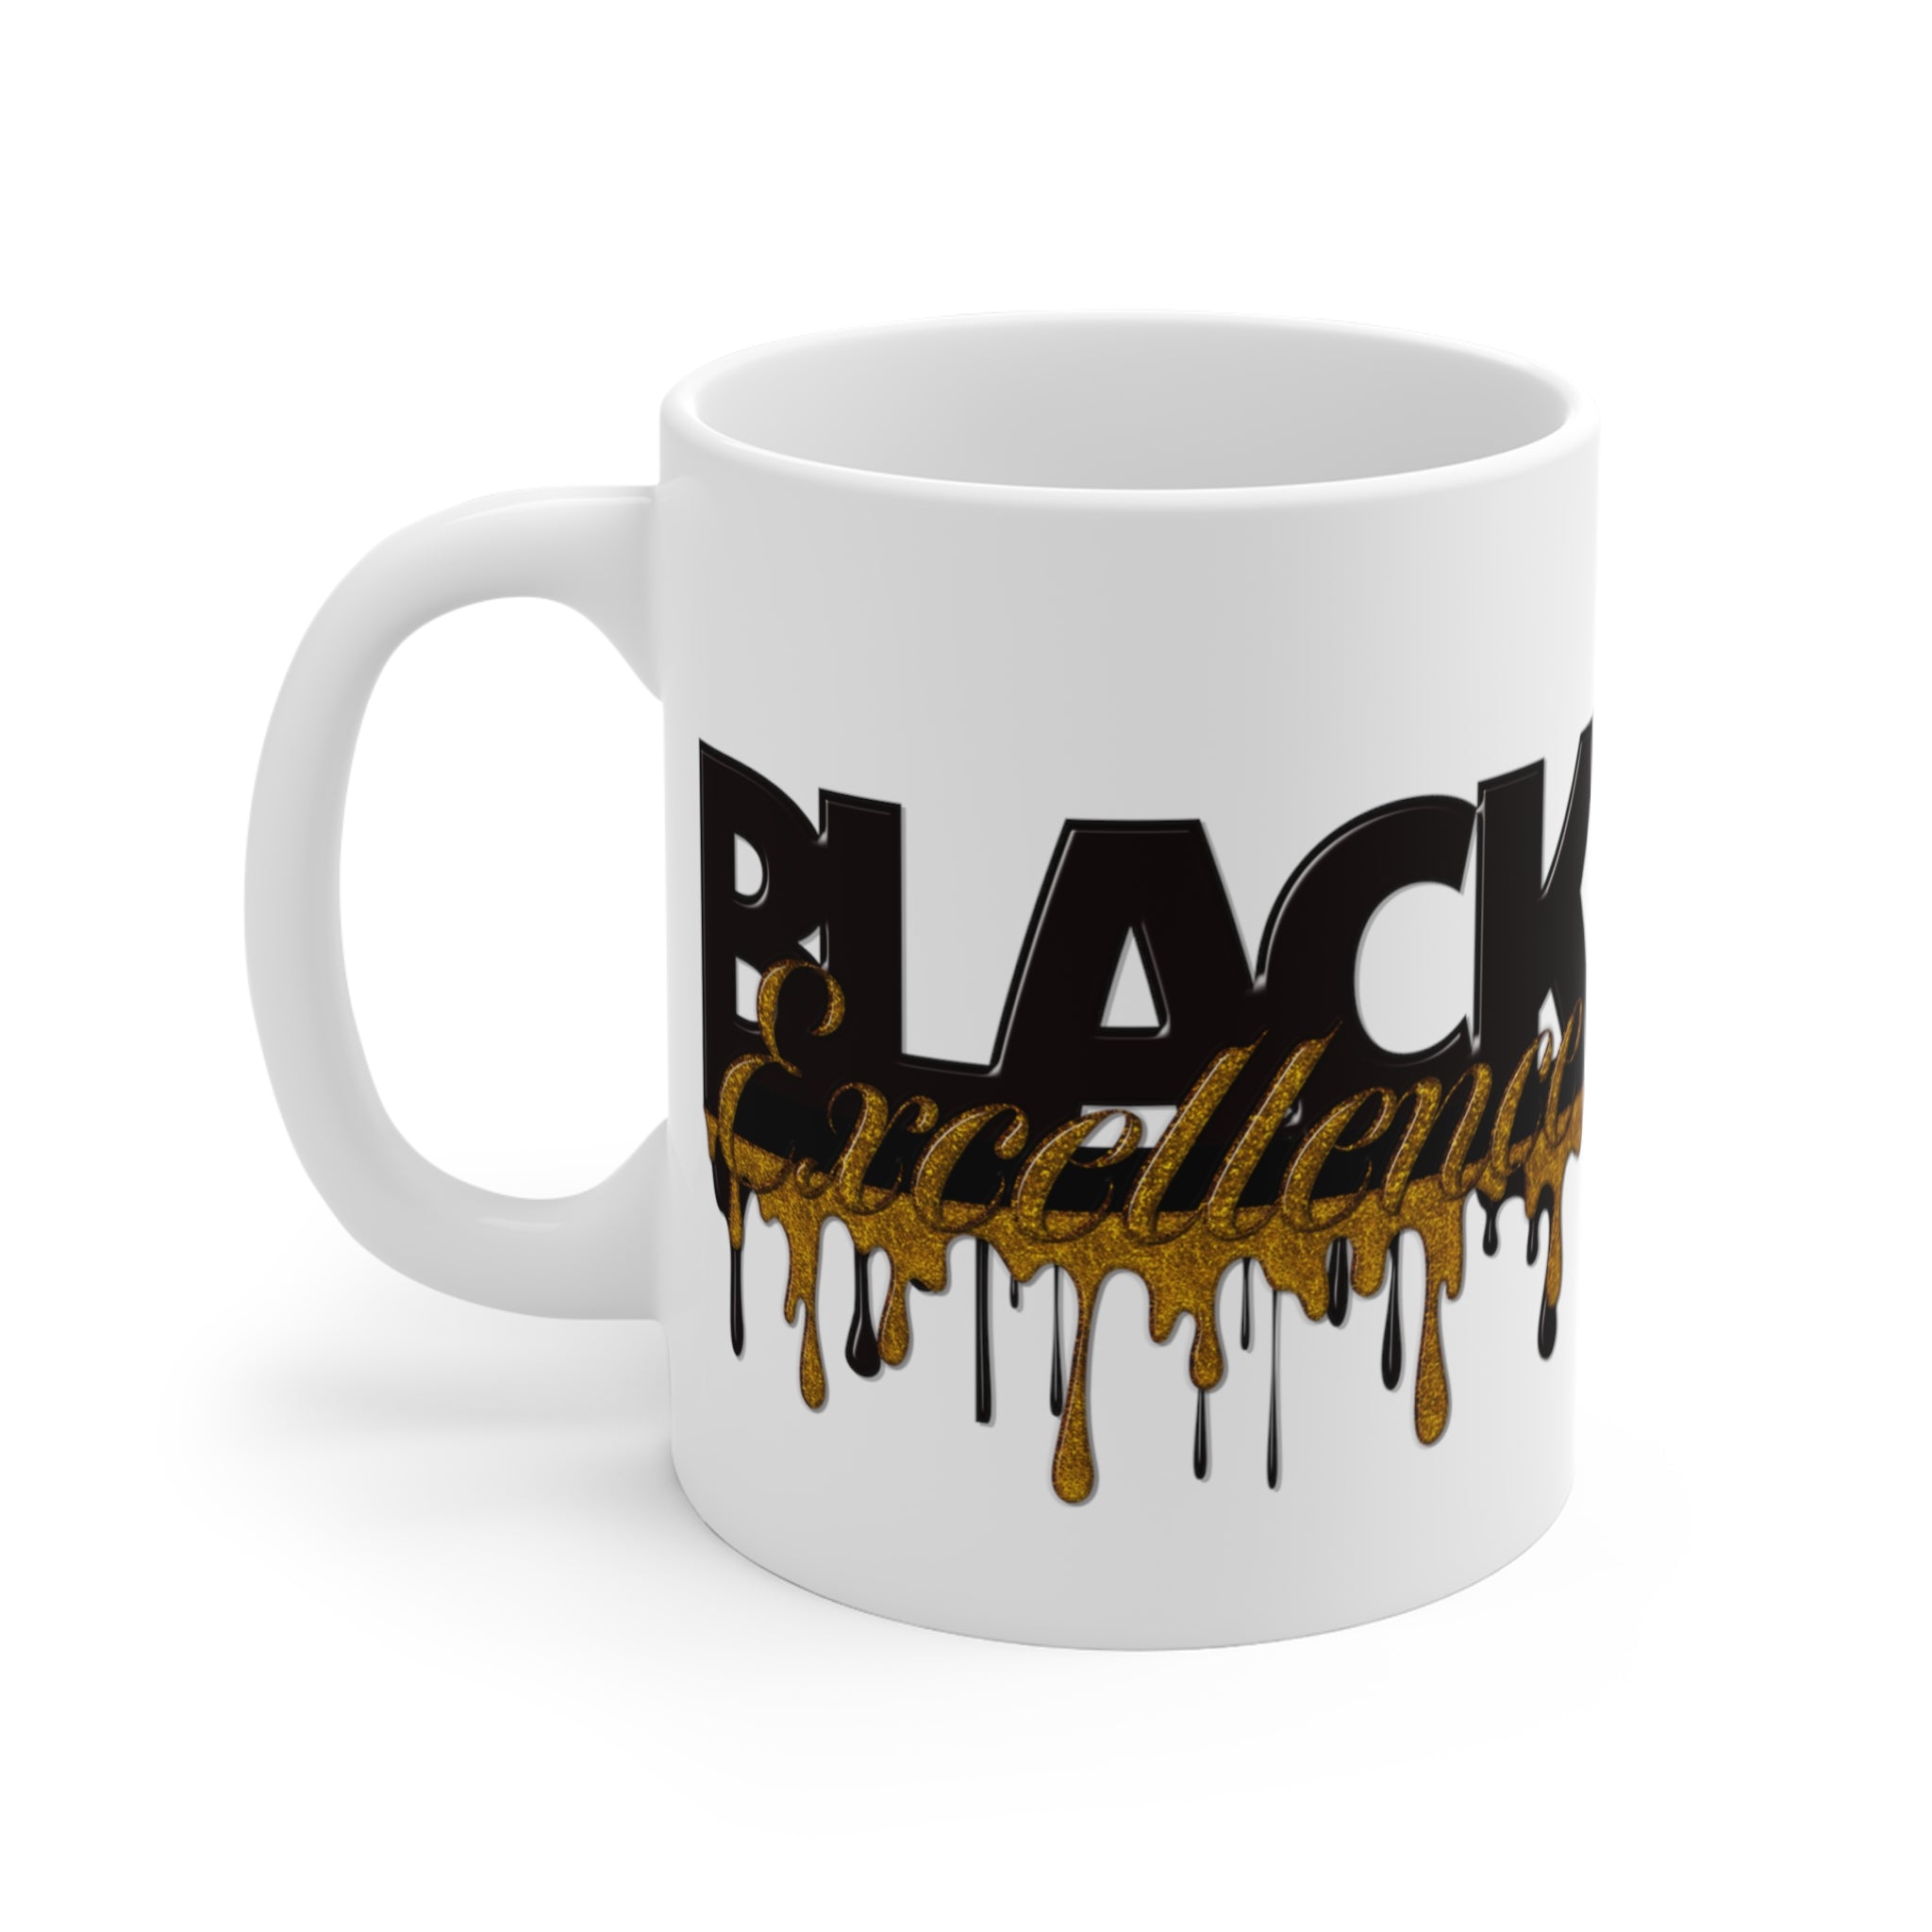 Black Excellence Coffee Mug.